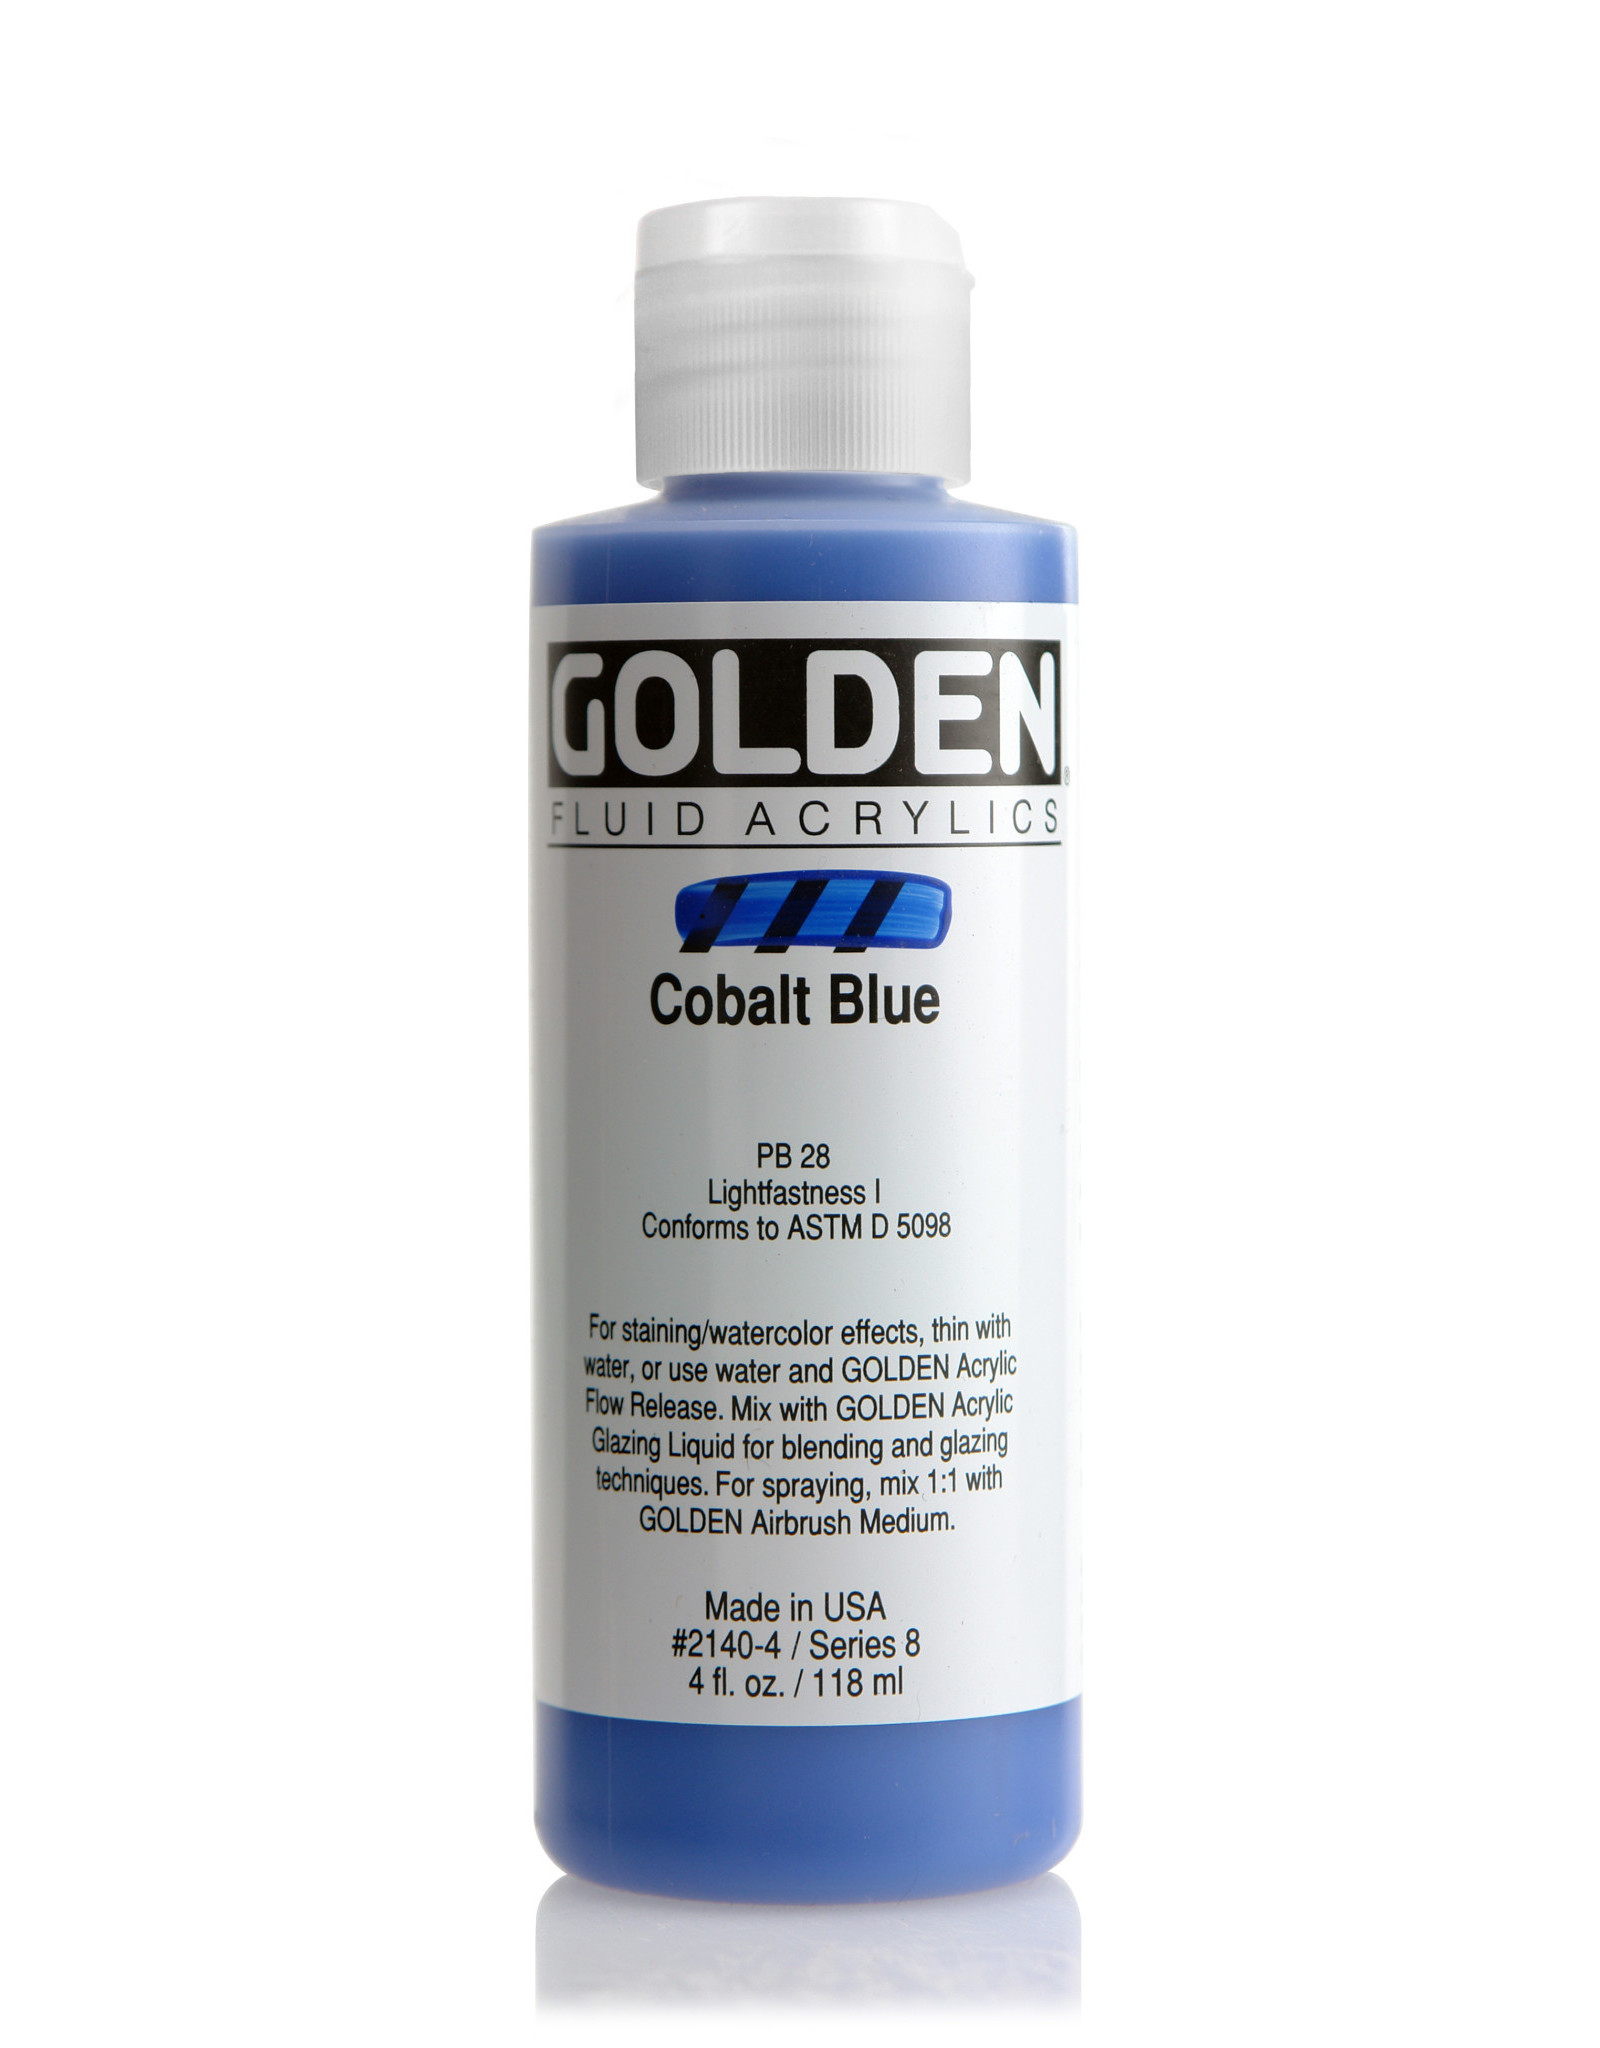 Golden Golden Fluid Acrylics, Cobalt Blue 4oz Cylinder